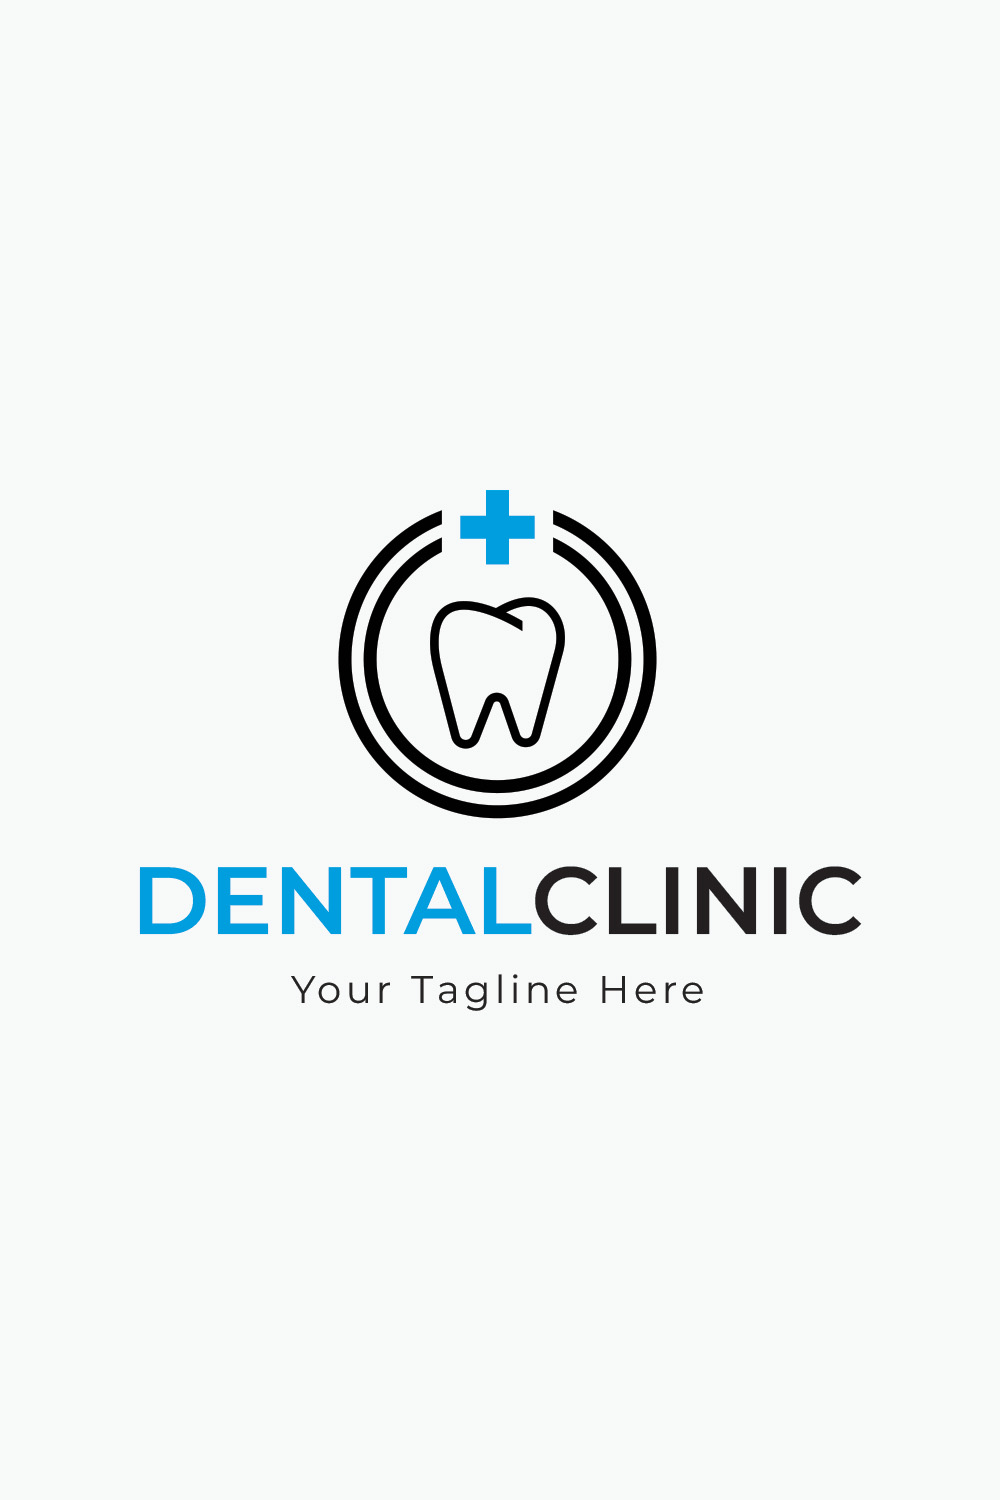 Dental Clinic Logo Template Pinterest image.